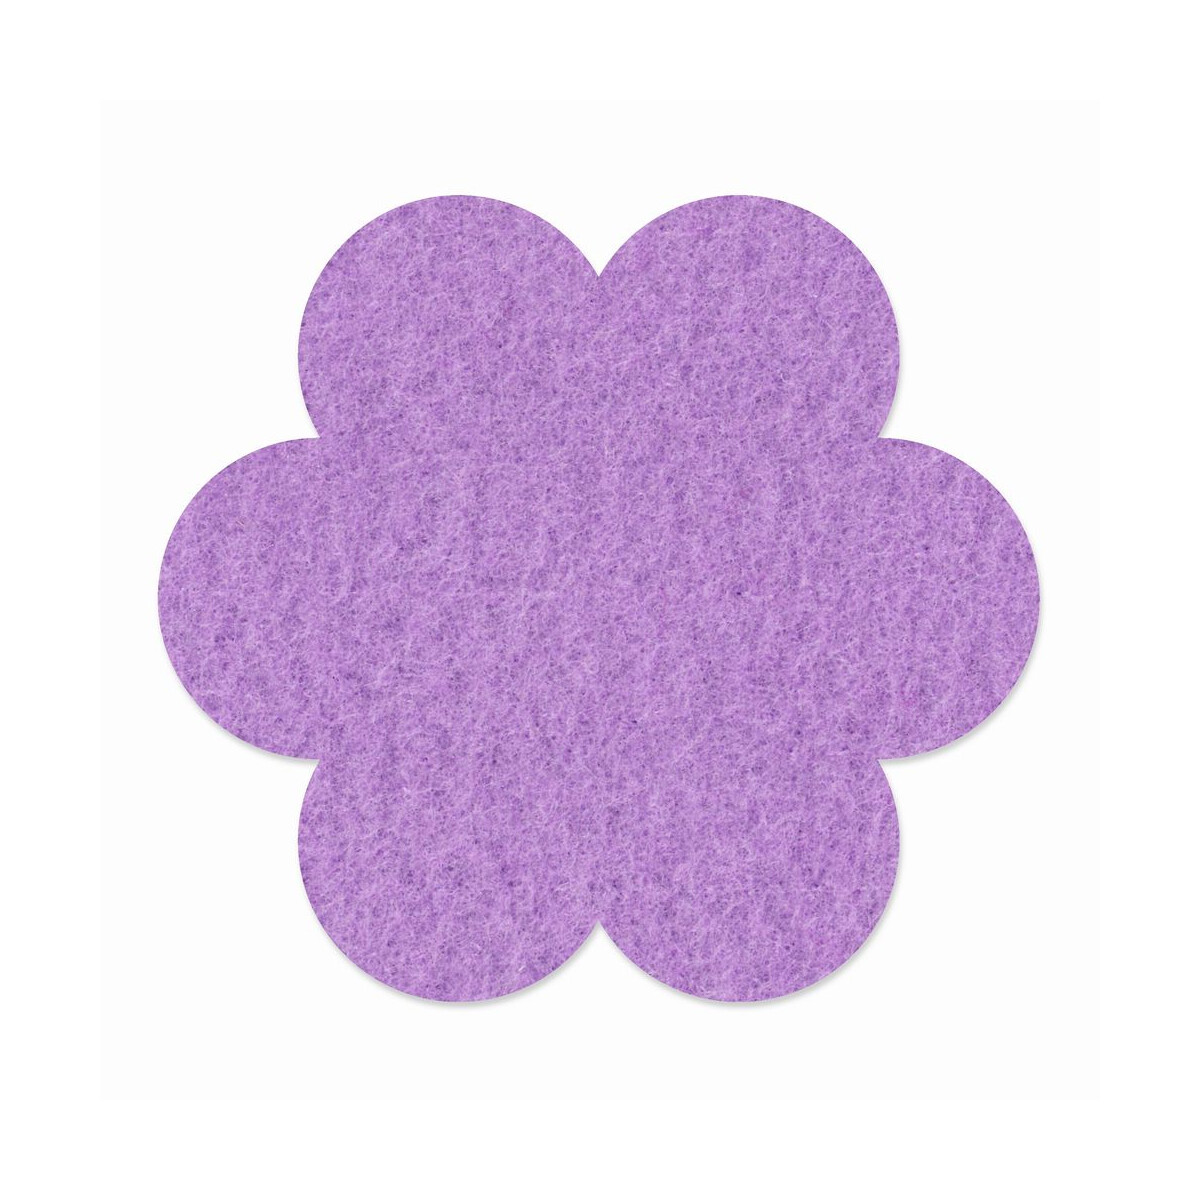 1 x FILZ Untersetzer Blume 15 cm - lavendel